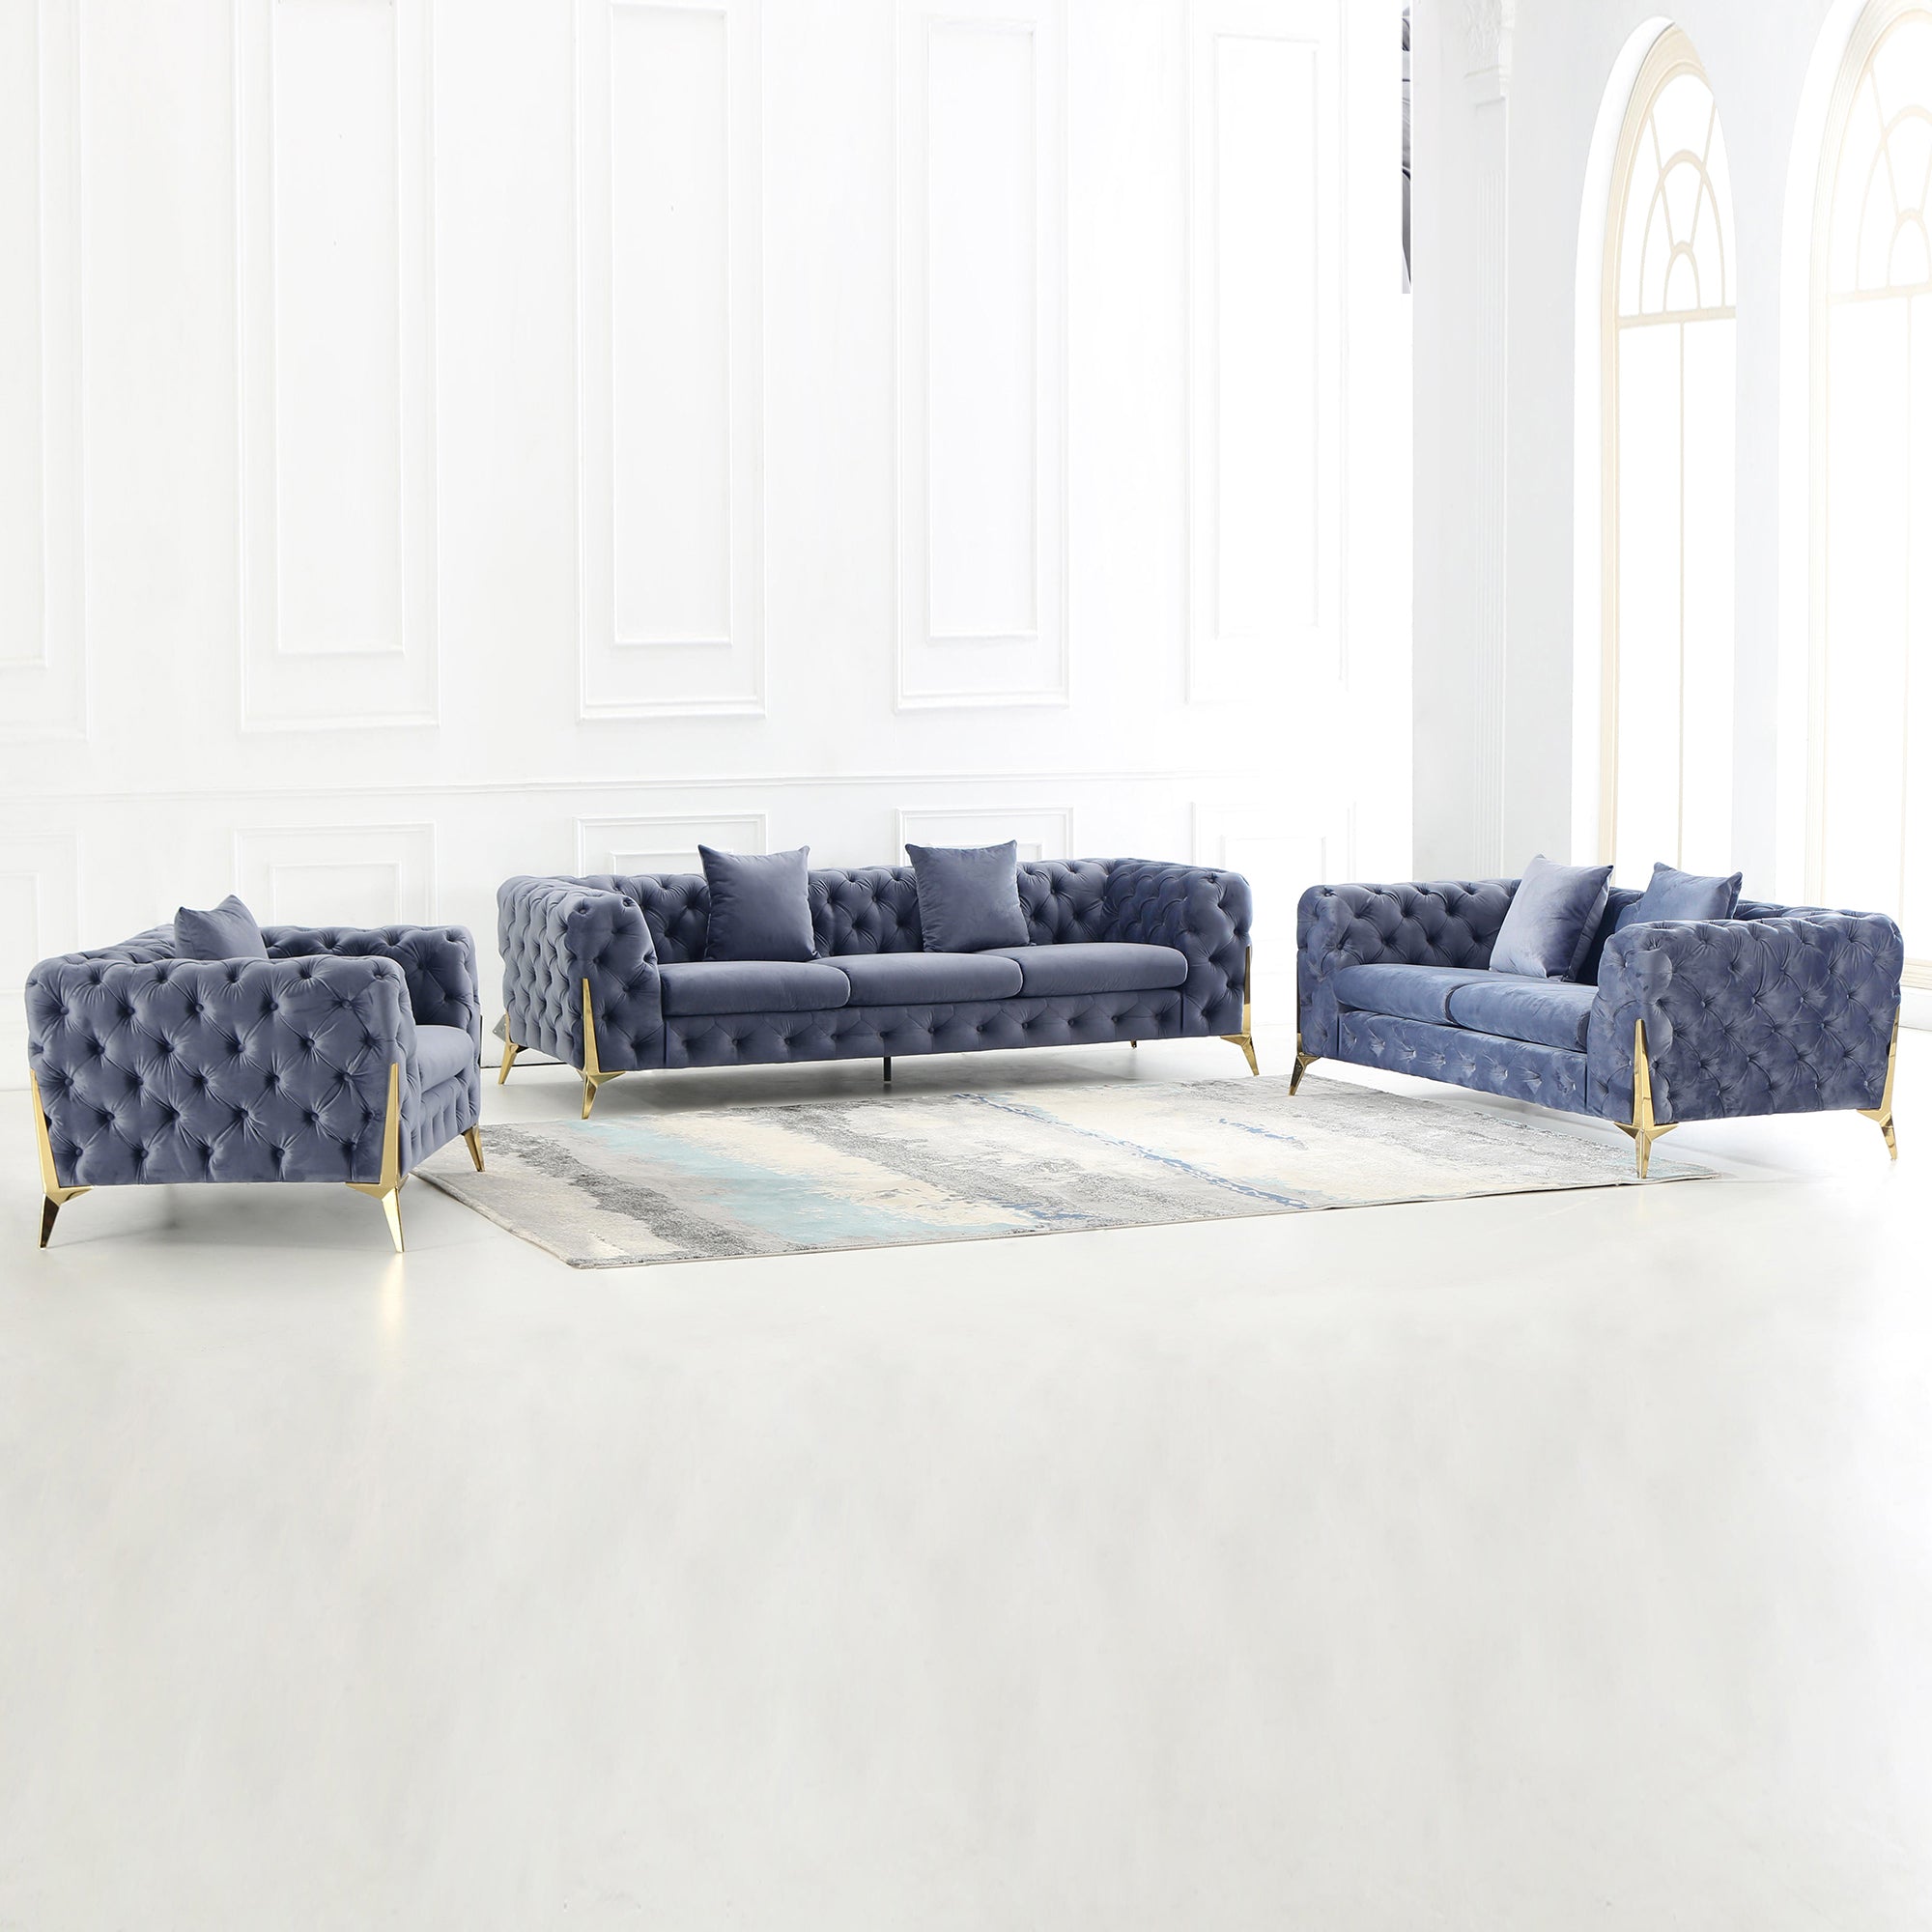 August Grove Living Room Set Sofa Lovesweat Armchair Grey